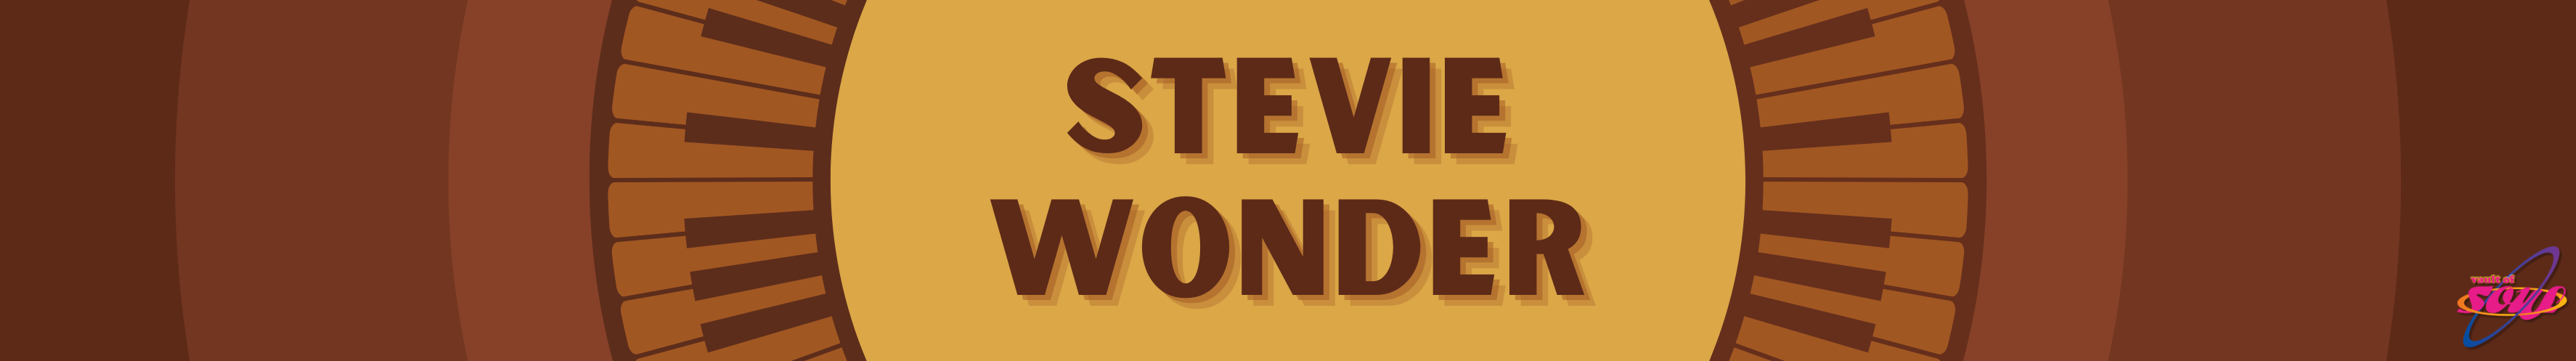 Stevie Wonder, The Vault of Soul, Soul, Superstition, For Once In My Life, The Secret Spot, WERS 88.9 FM